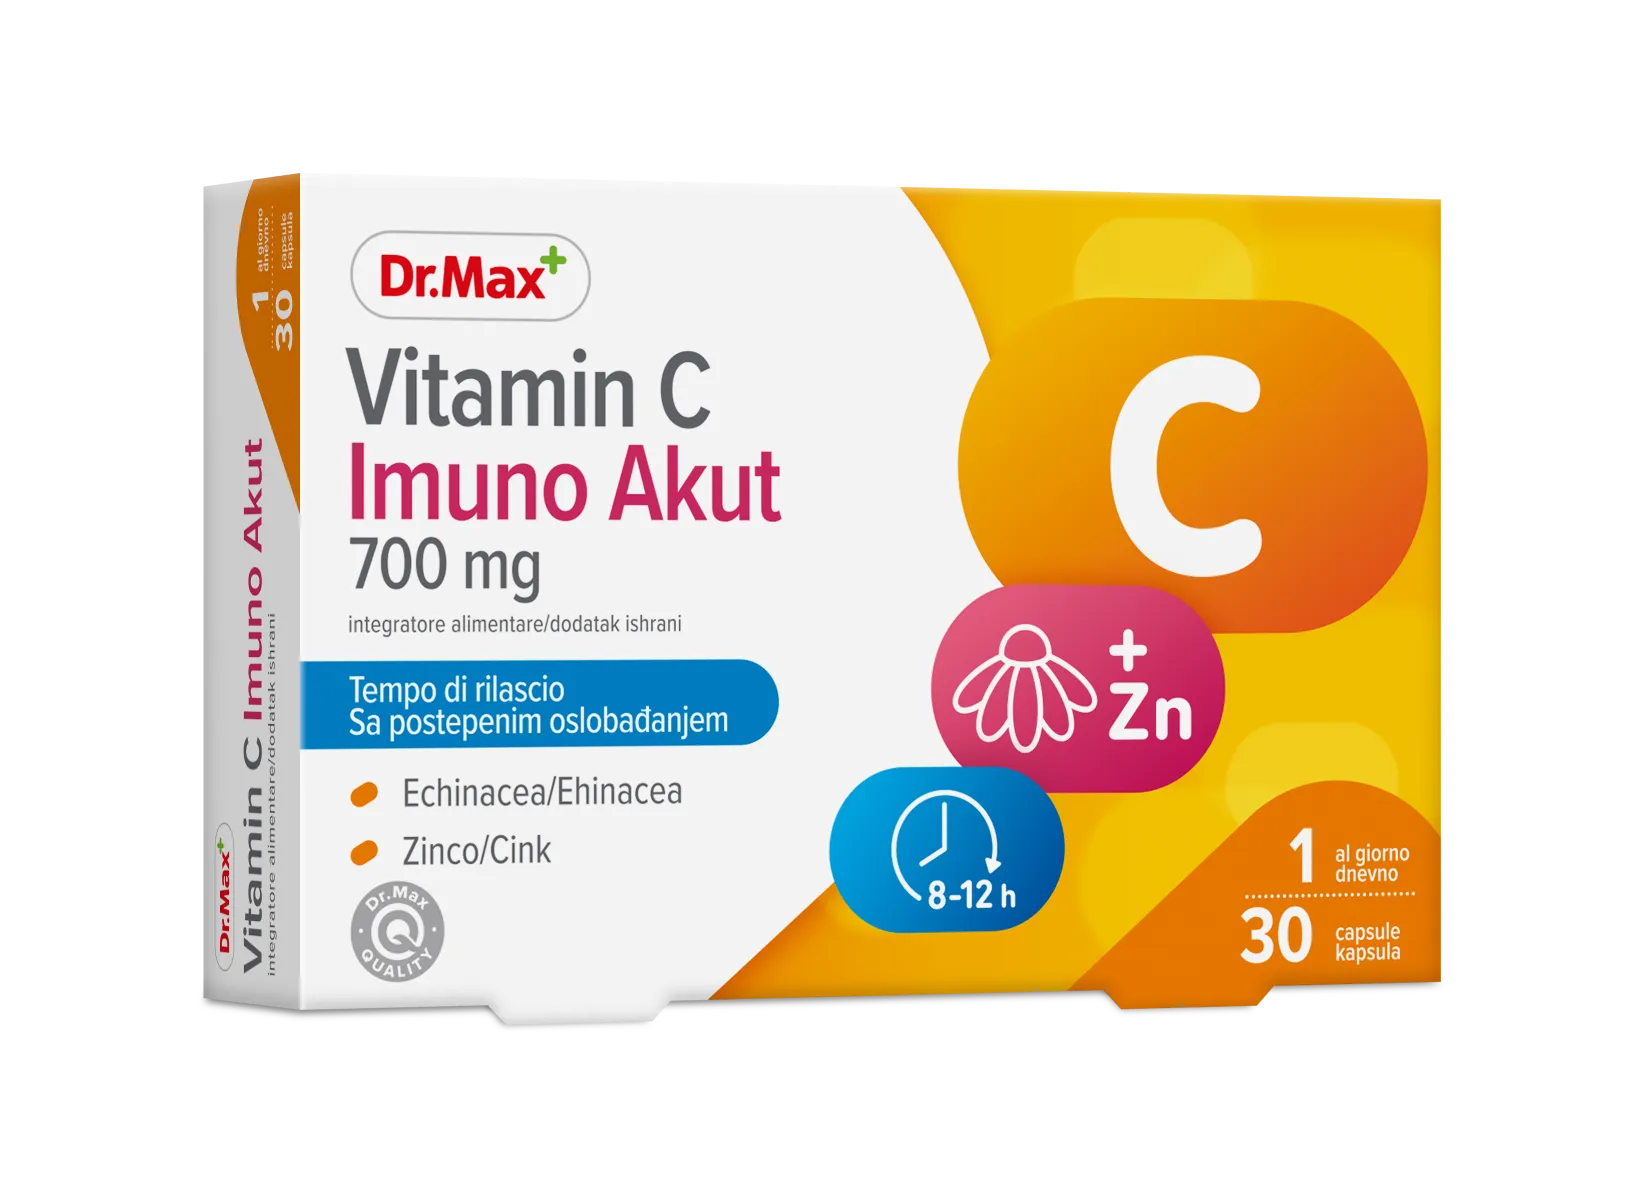 Dr.Max Vitamin C Imuno Akut 30 Capsule Integratore di Vitamina C, Zinco ed Echinacea